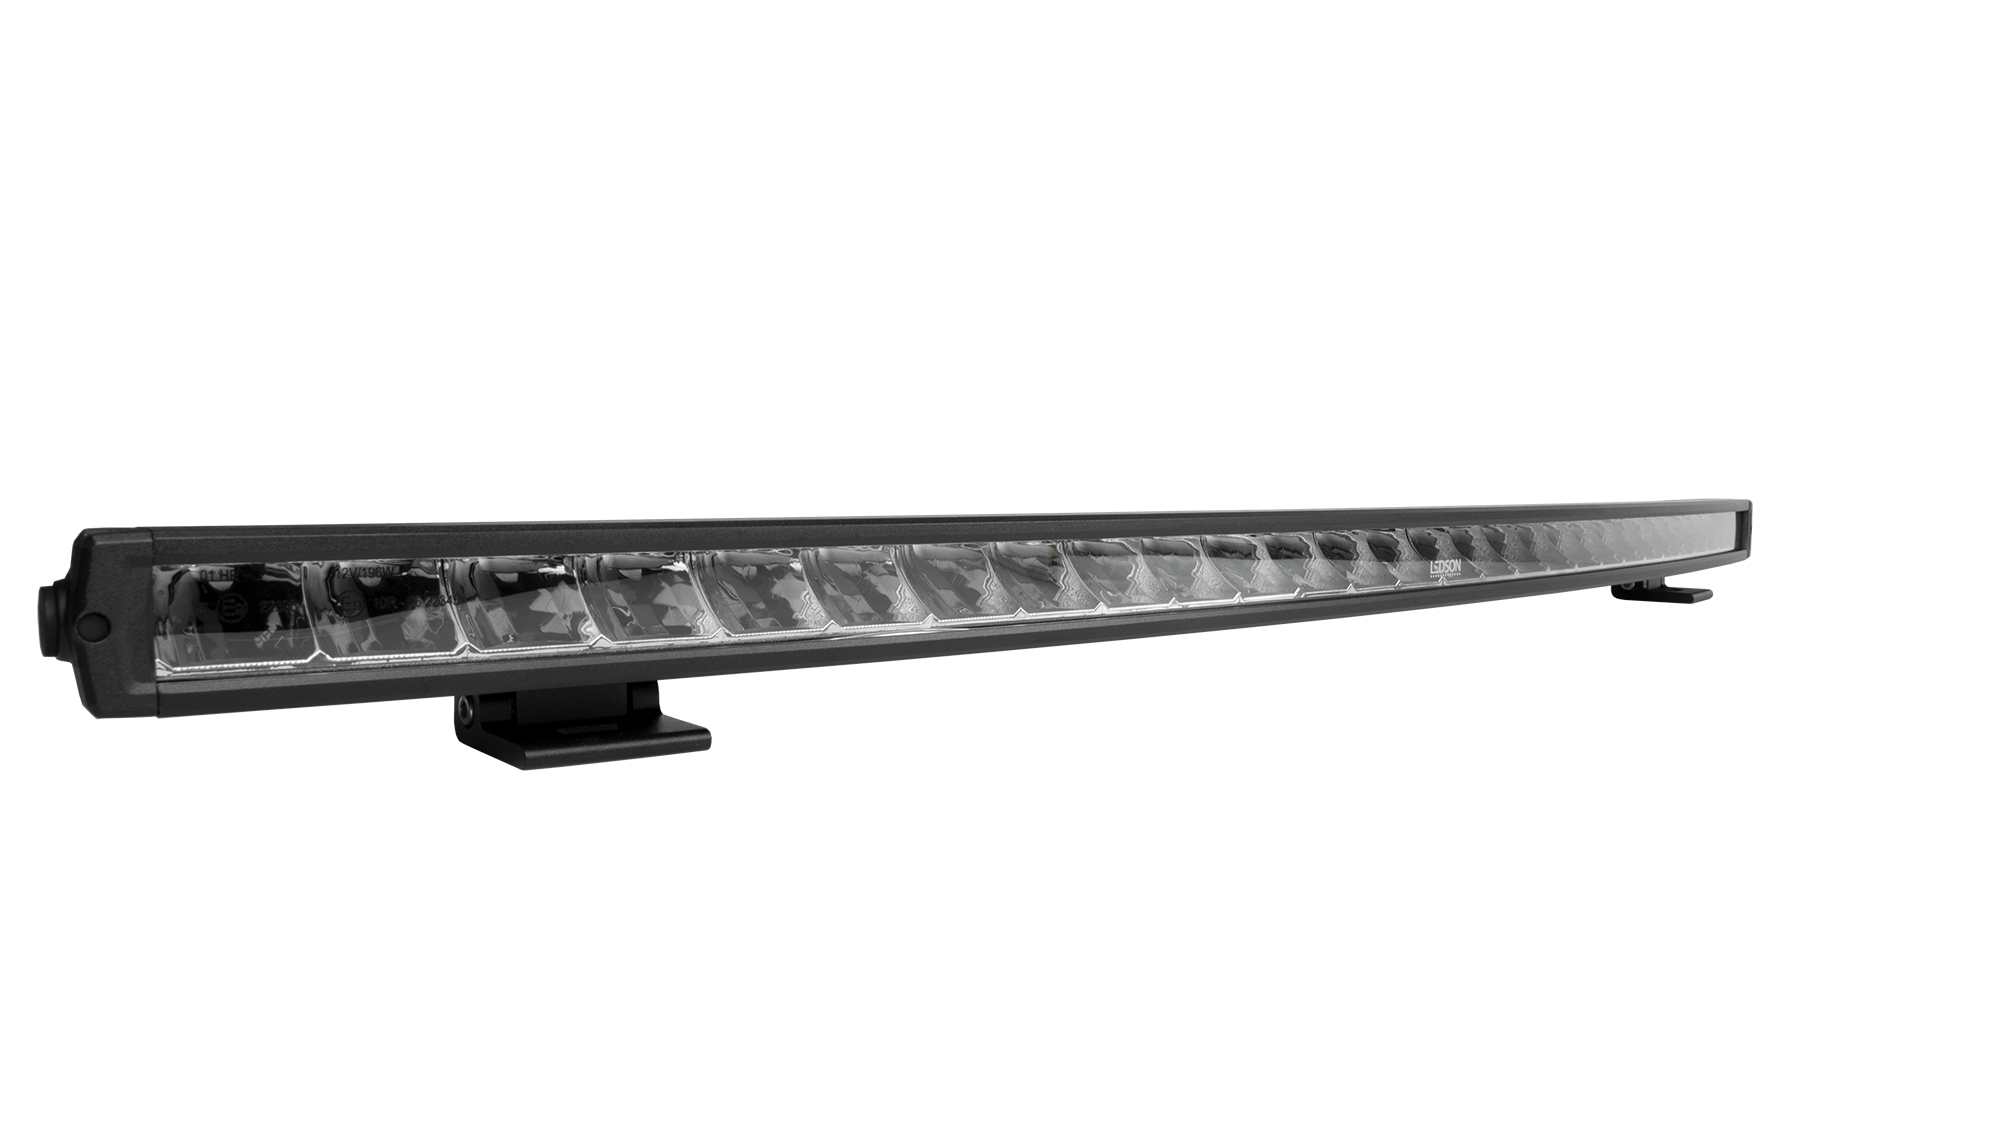 LED-bars 760 (30") - 1270 (50") mm (larger)